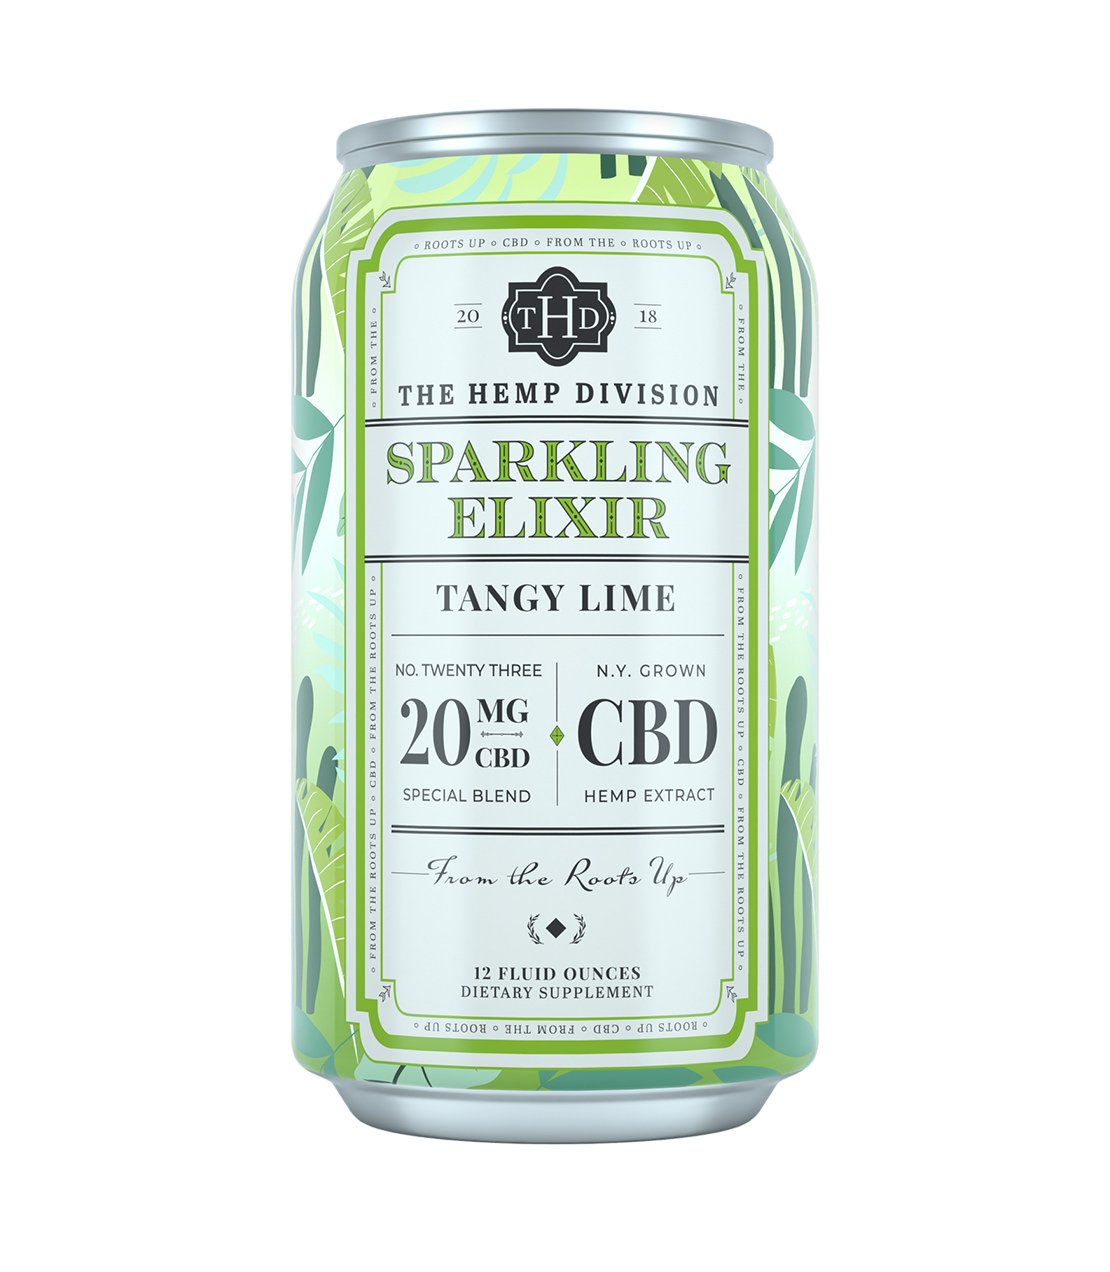 Sparkling Elixir - 20 MG CBD - Tangy Lime 12 oz. Can - Harney & Sons Fine Teas